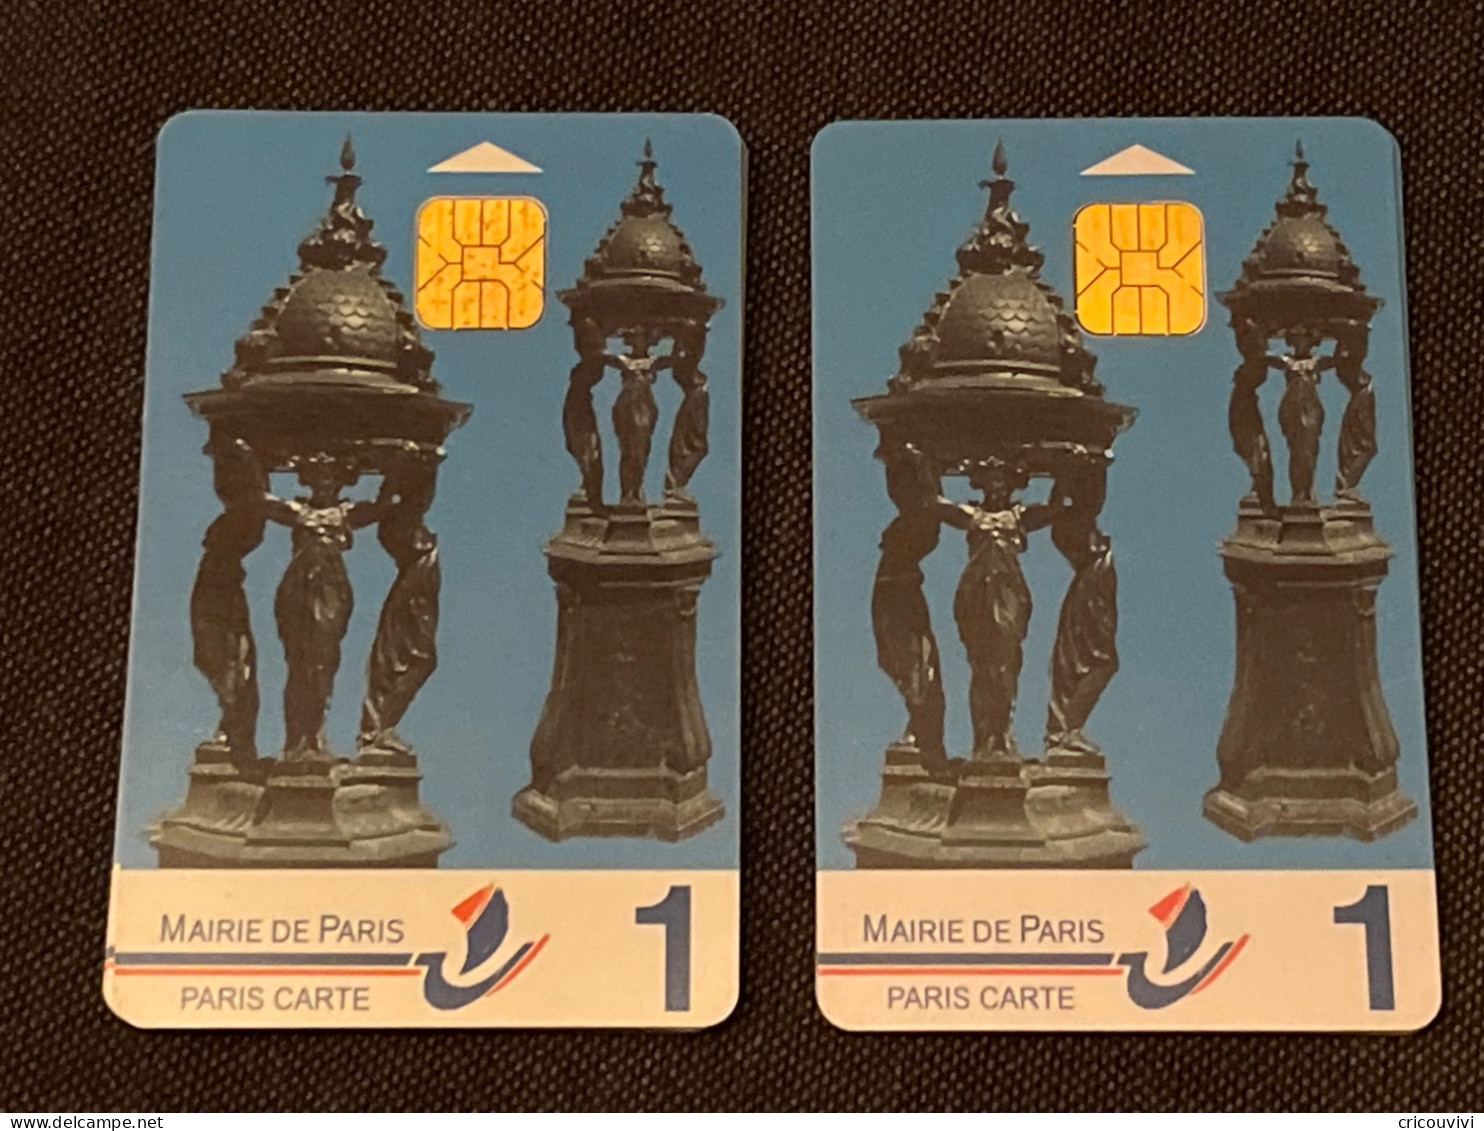 Paris Carte 16 - Parkkarten